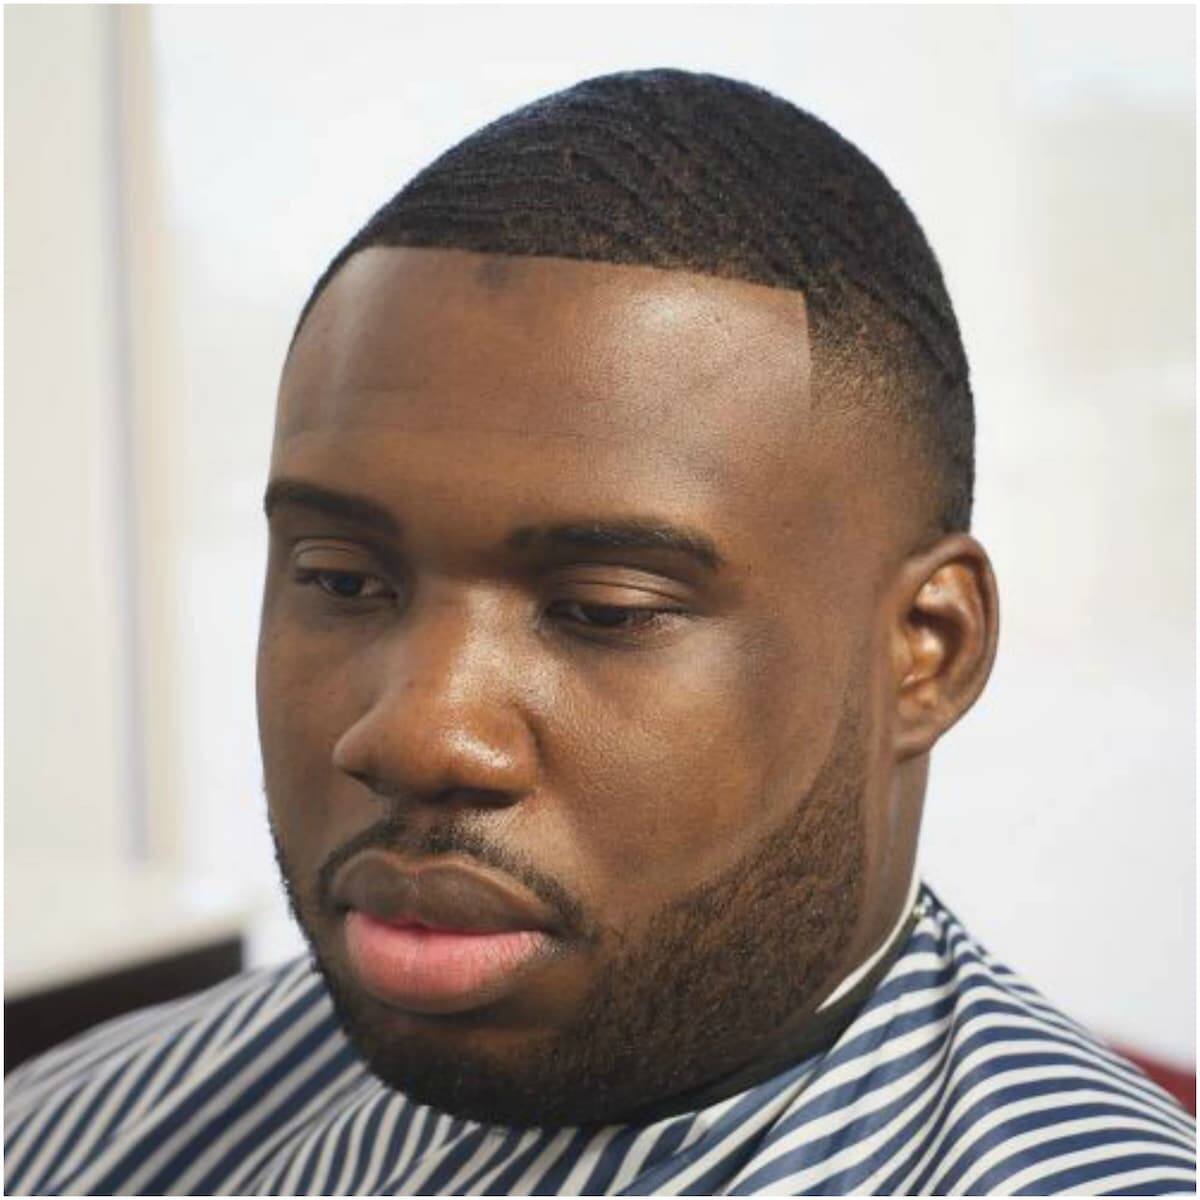 Low Skin Fade Haircut Black Men - YouTube